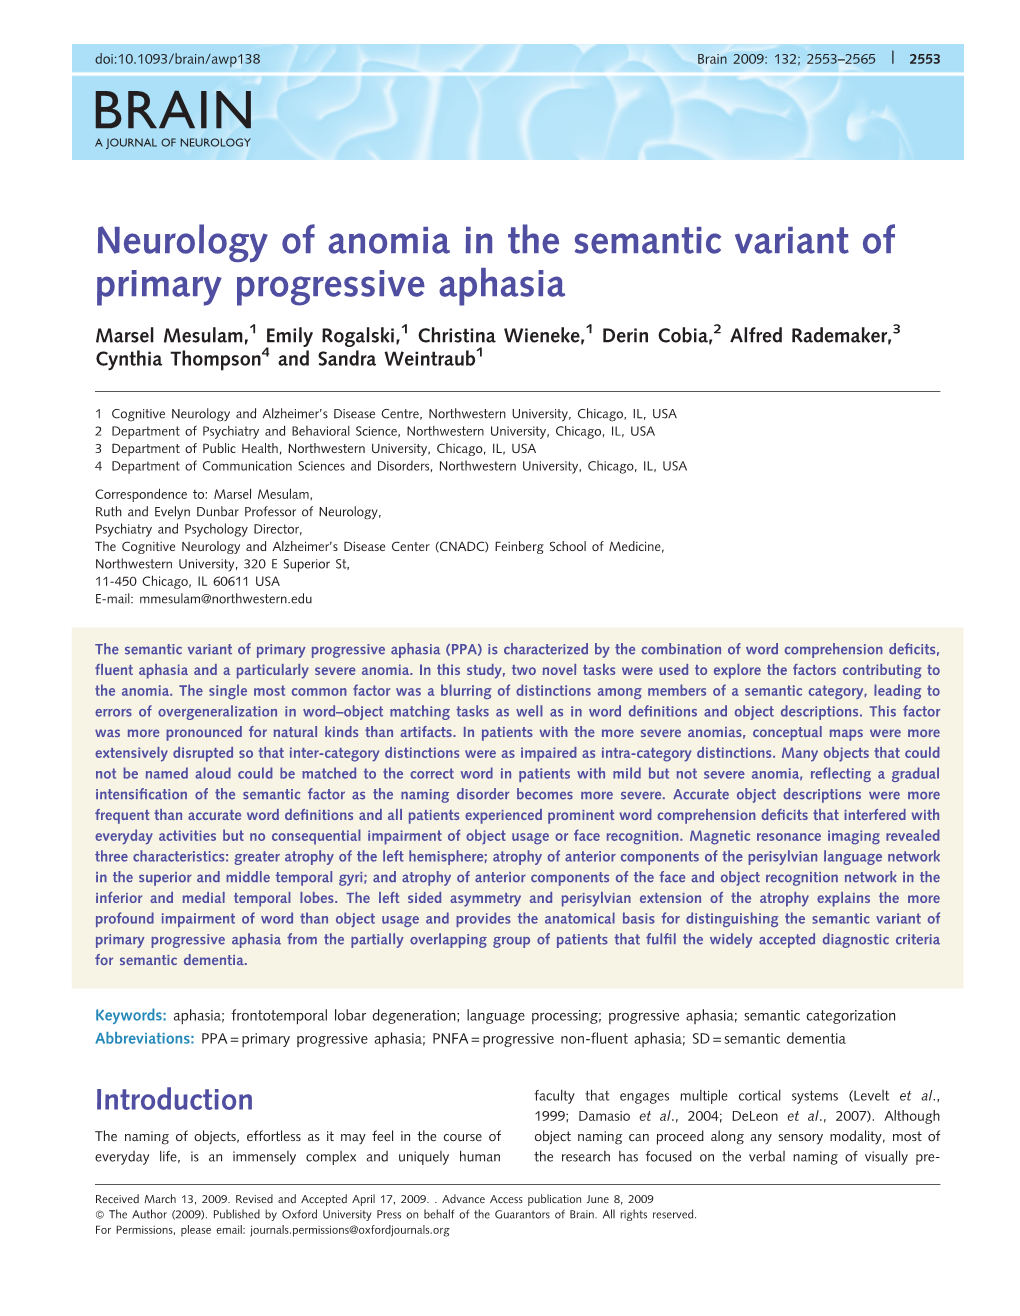 Neurology of Anomia in the Semantic Variant of Primary Progressive Aphasia